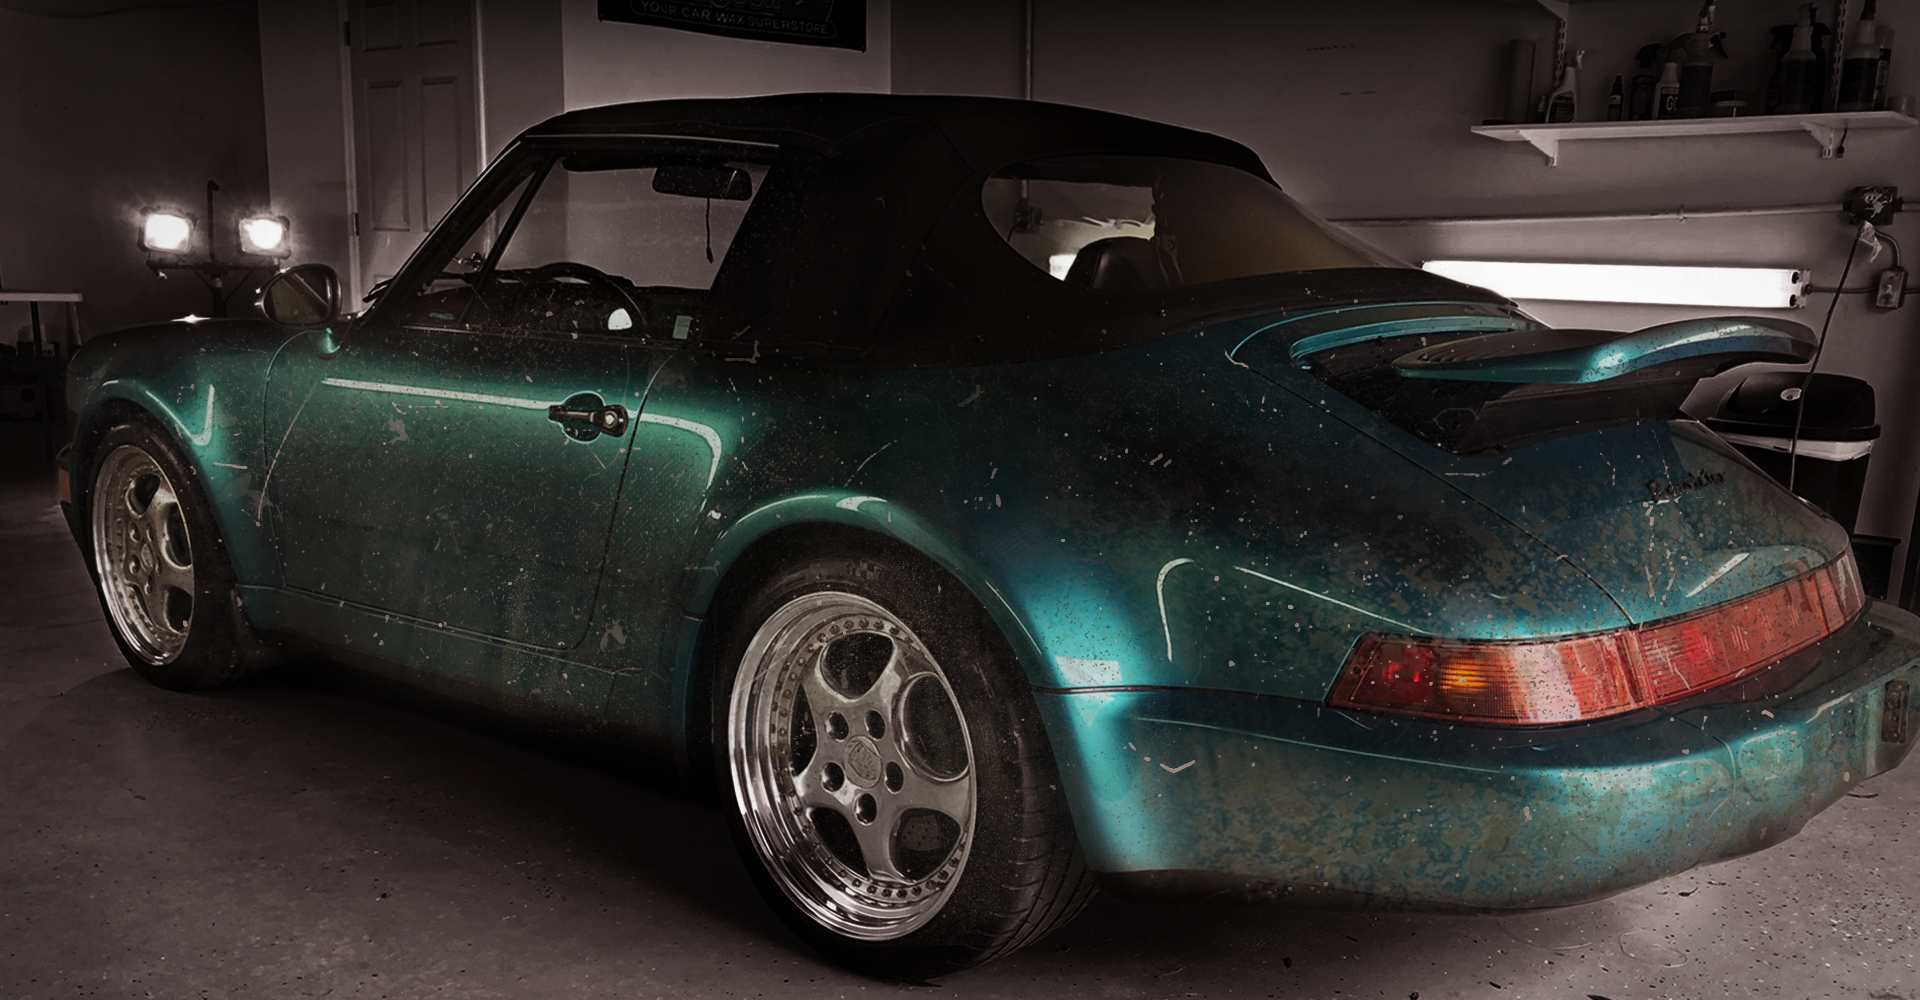 Porsche before: dirty looking